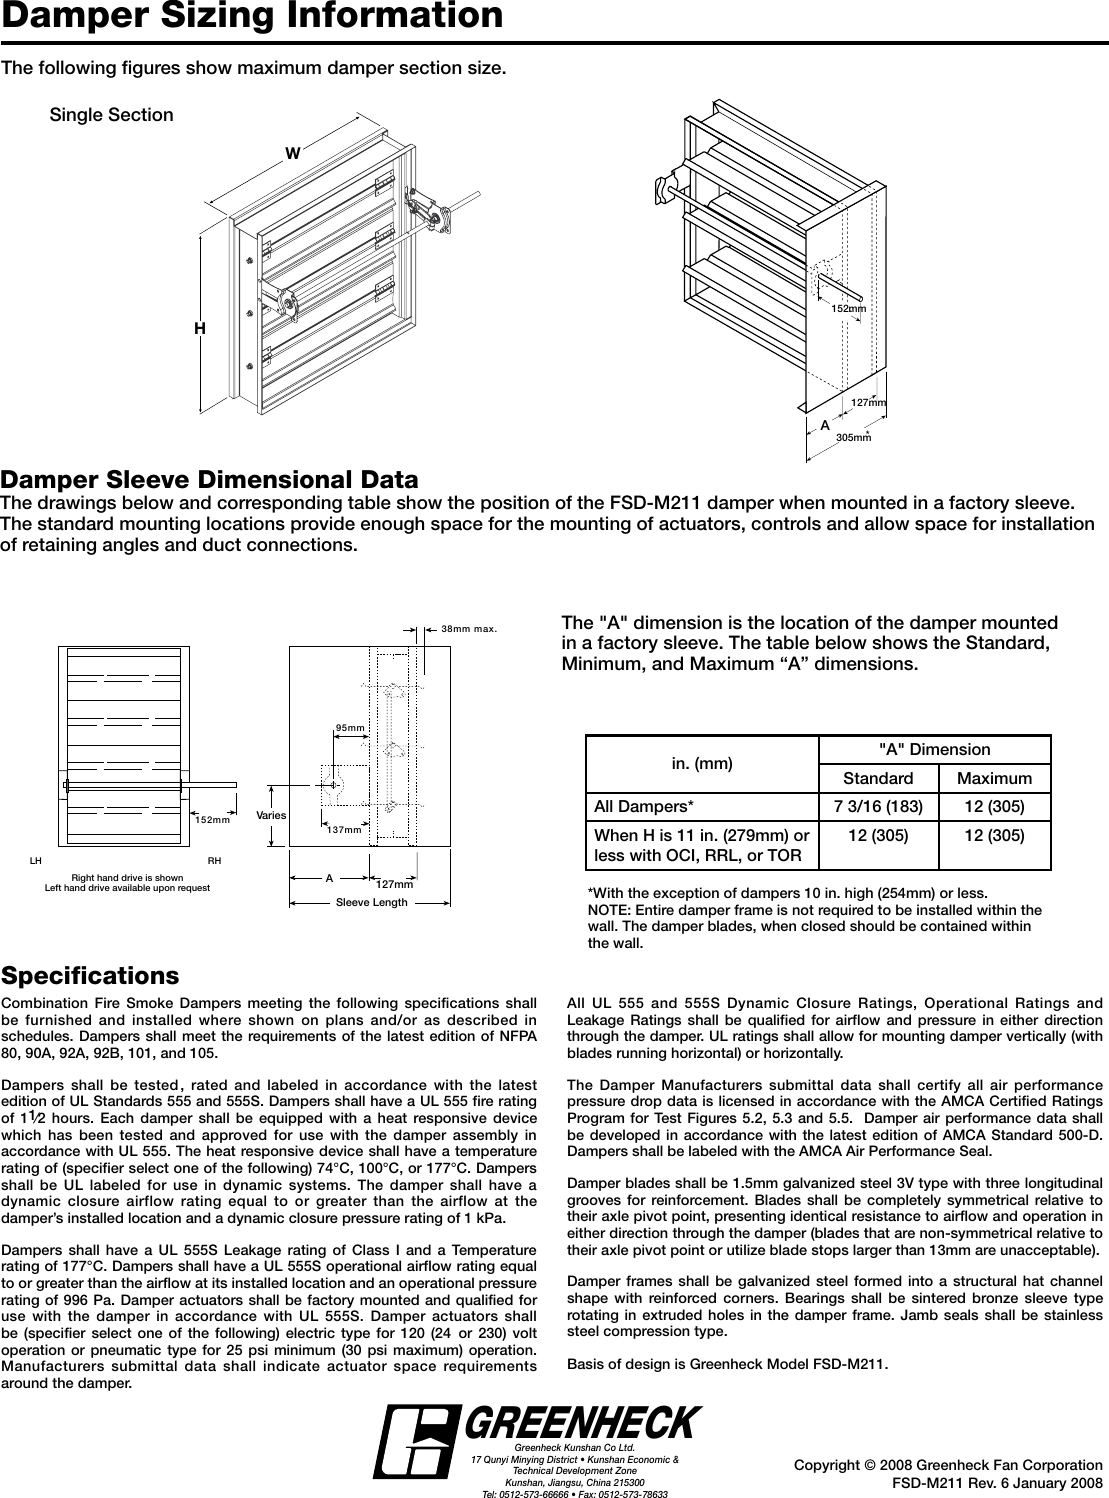 Page 6 of 6 - Greenheck-Fan Greenheck-Fan-Combination-Fire-Smoke-Dampers-Fsd-M211-Users-Manual-  Greenheck-fan-combination-fire-smoke-dampers-fsd-m211-users-manual